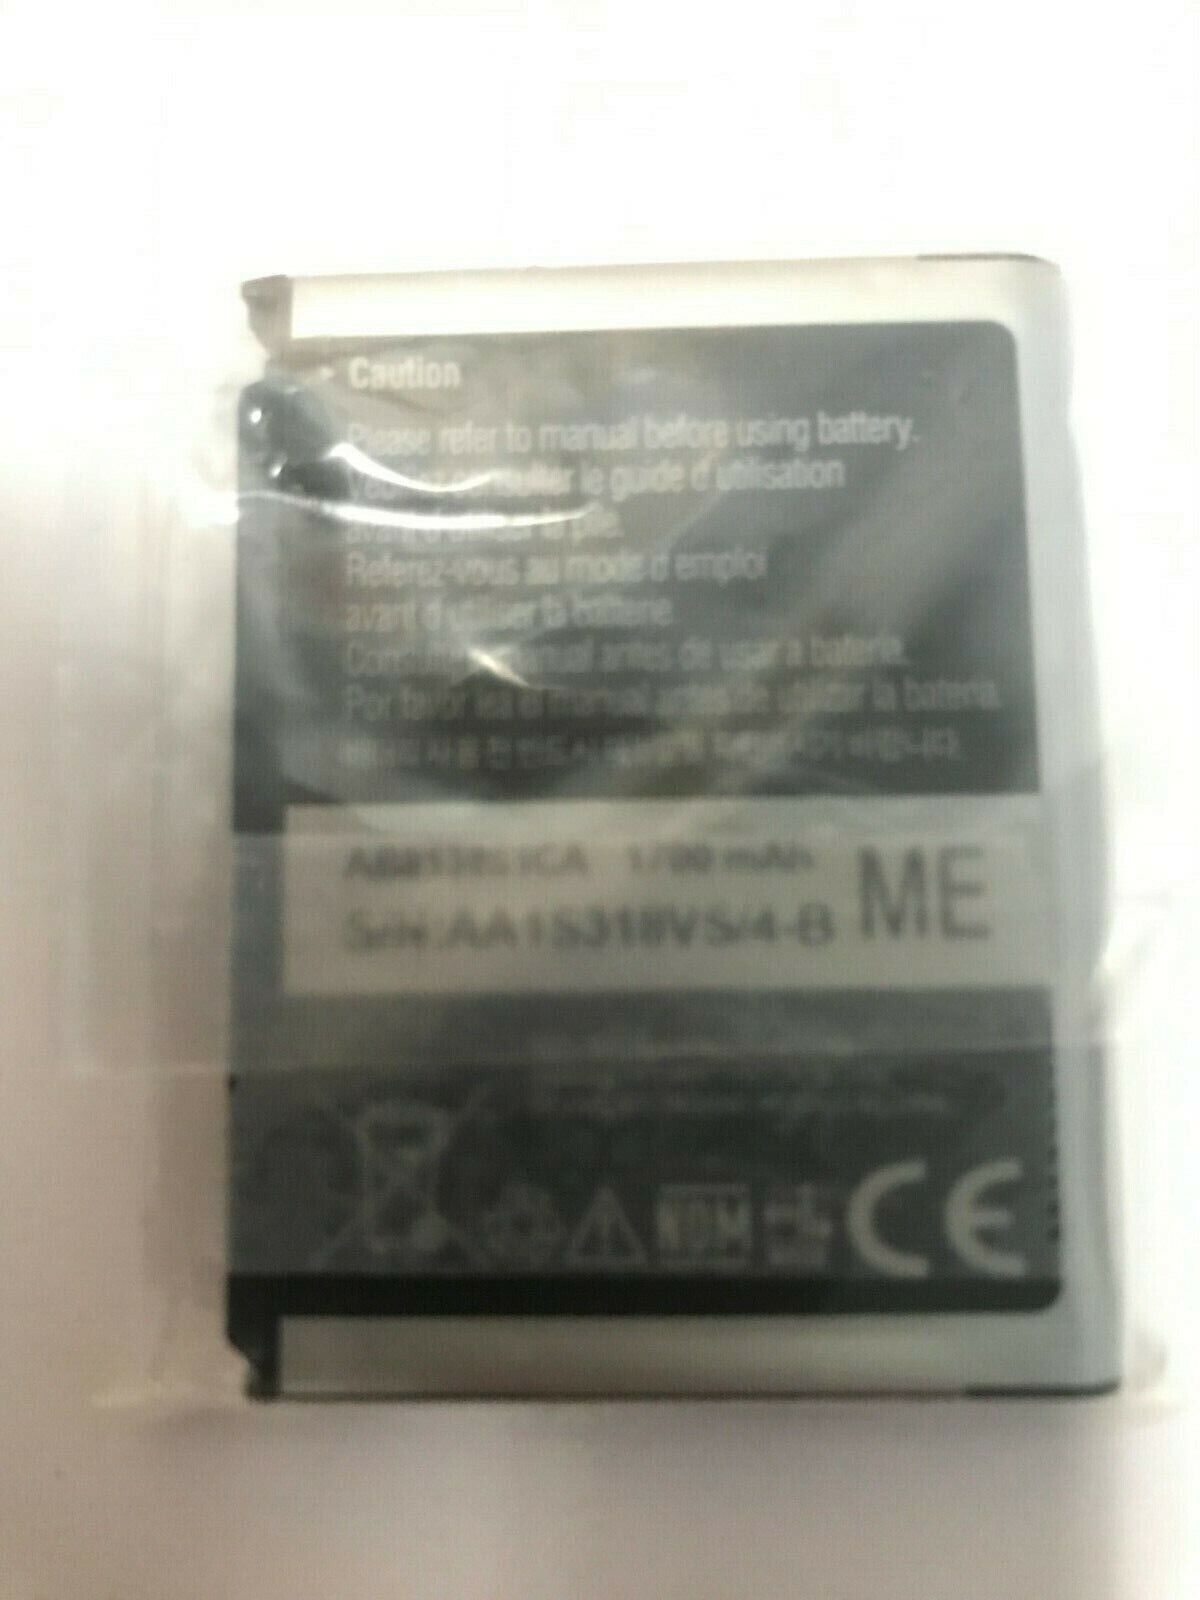 Primary image for NEW OEM Samsung AB813851CA Cell Phone Battery BlackJack II i617 1700mAh GENUINE